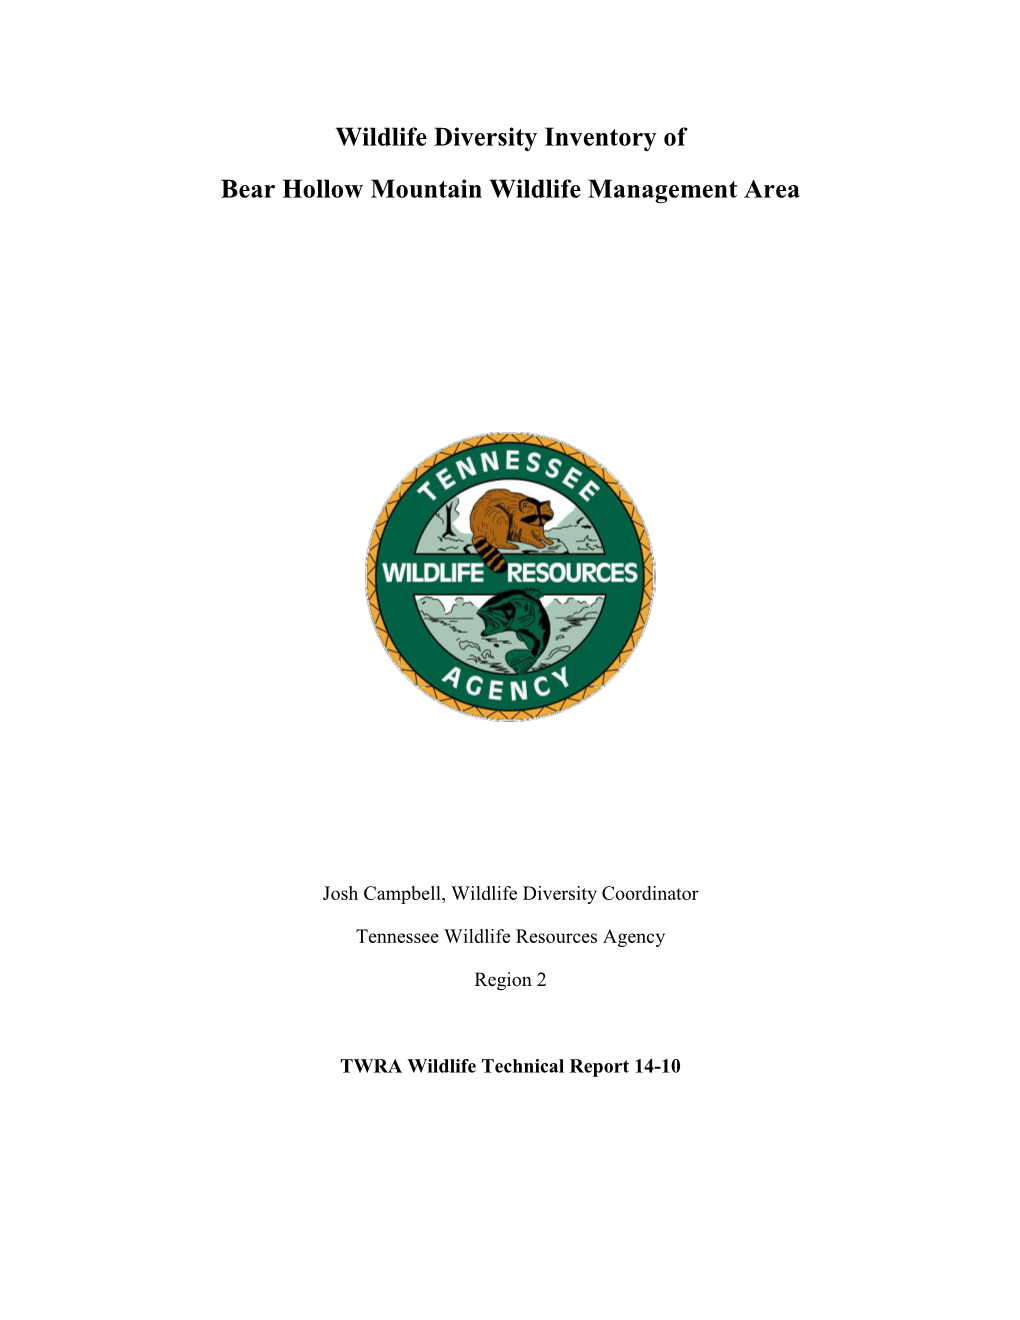 Wildlife Diversity Inventory of Bear Hollow Mountain Wildlife Management Area